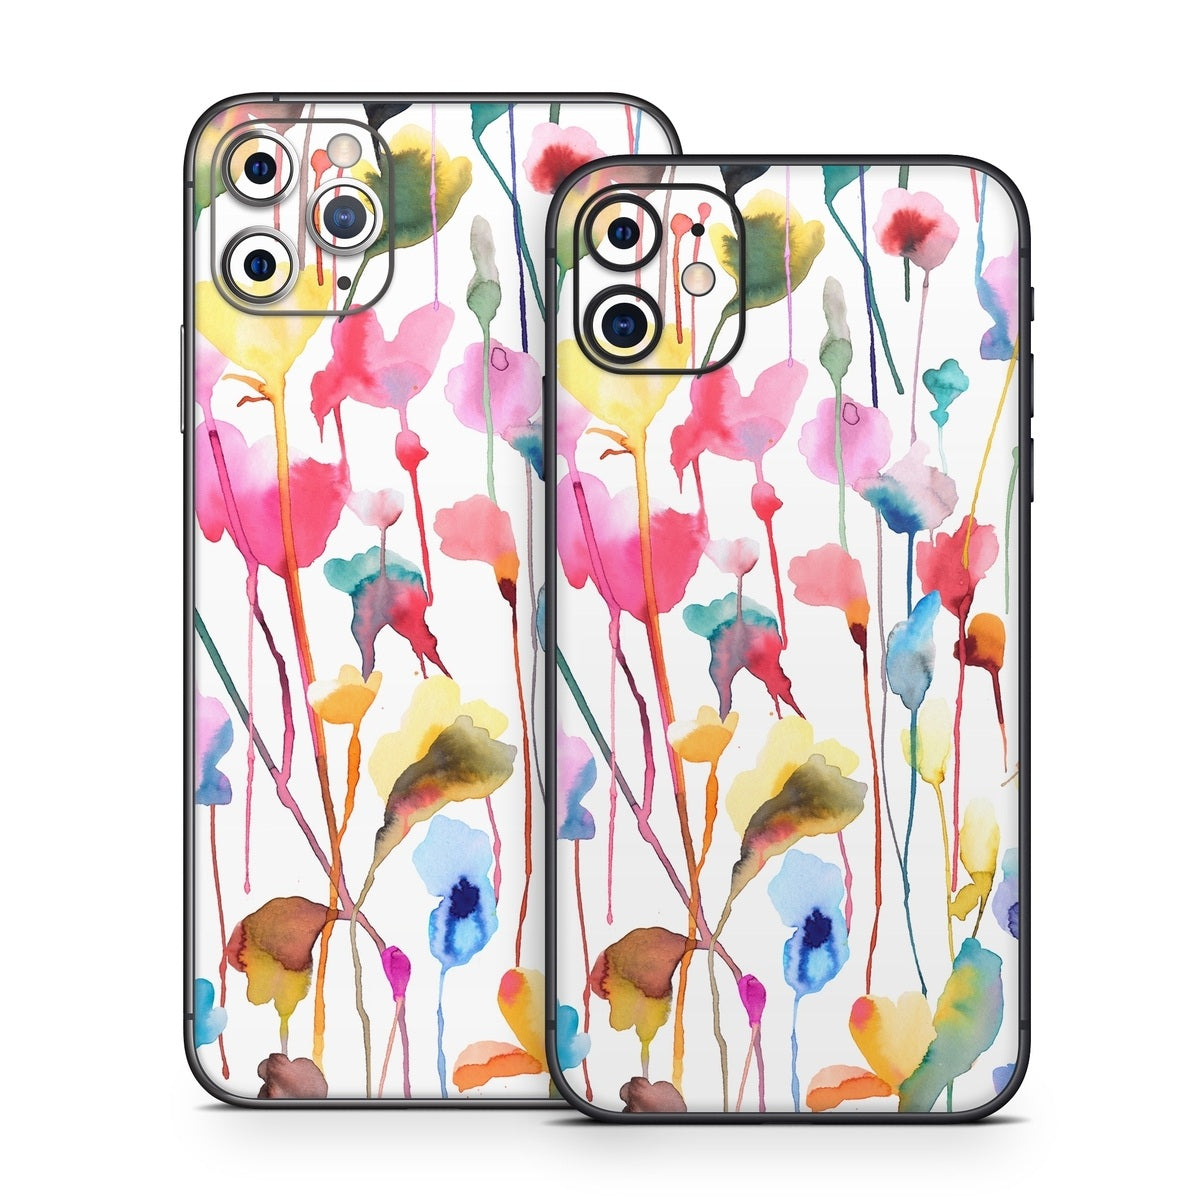 Watercolor Wild Flowers - Apple iPhone 11 Skin